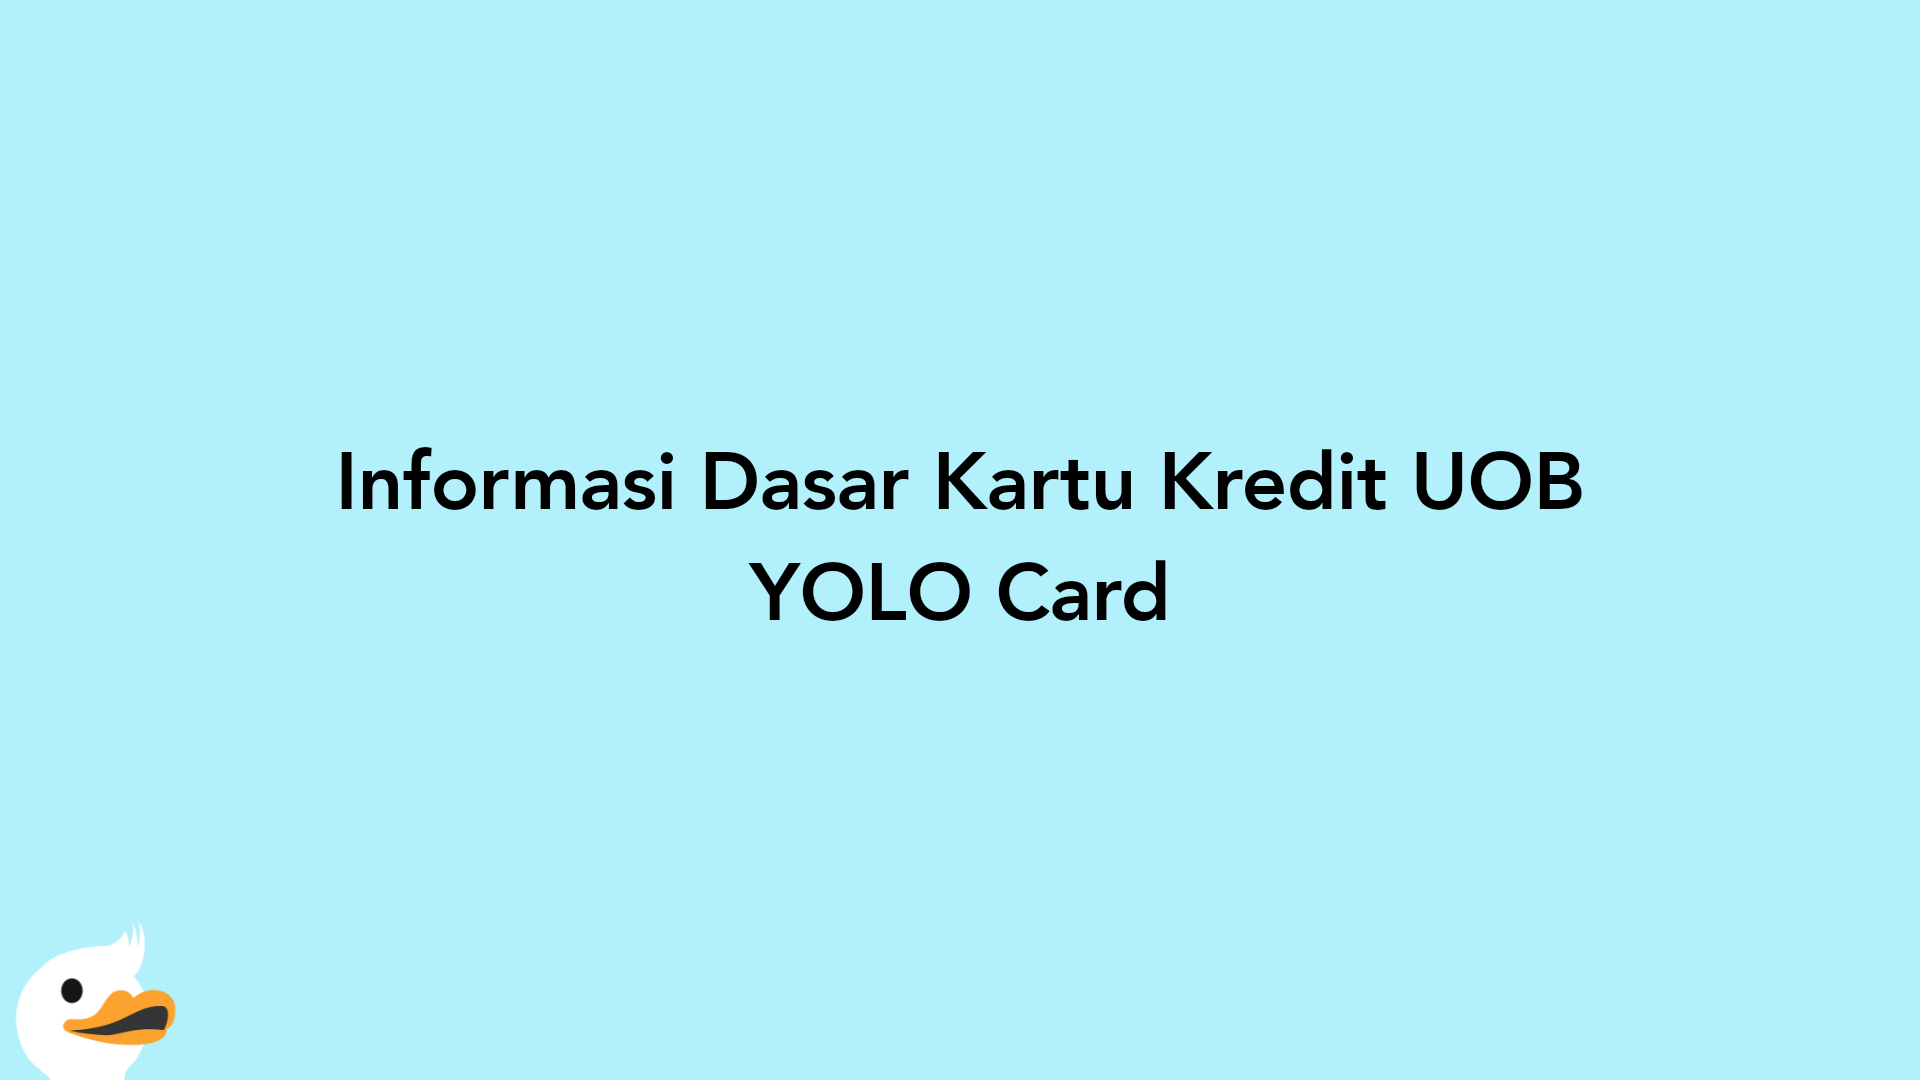 Informasi Dasar Kartu Kredit UOB YOLO Card